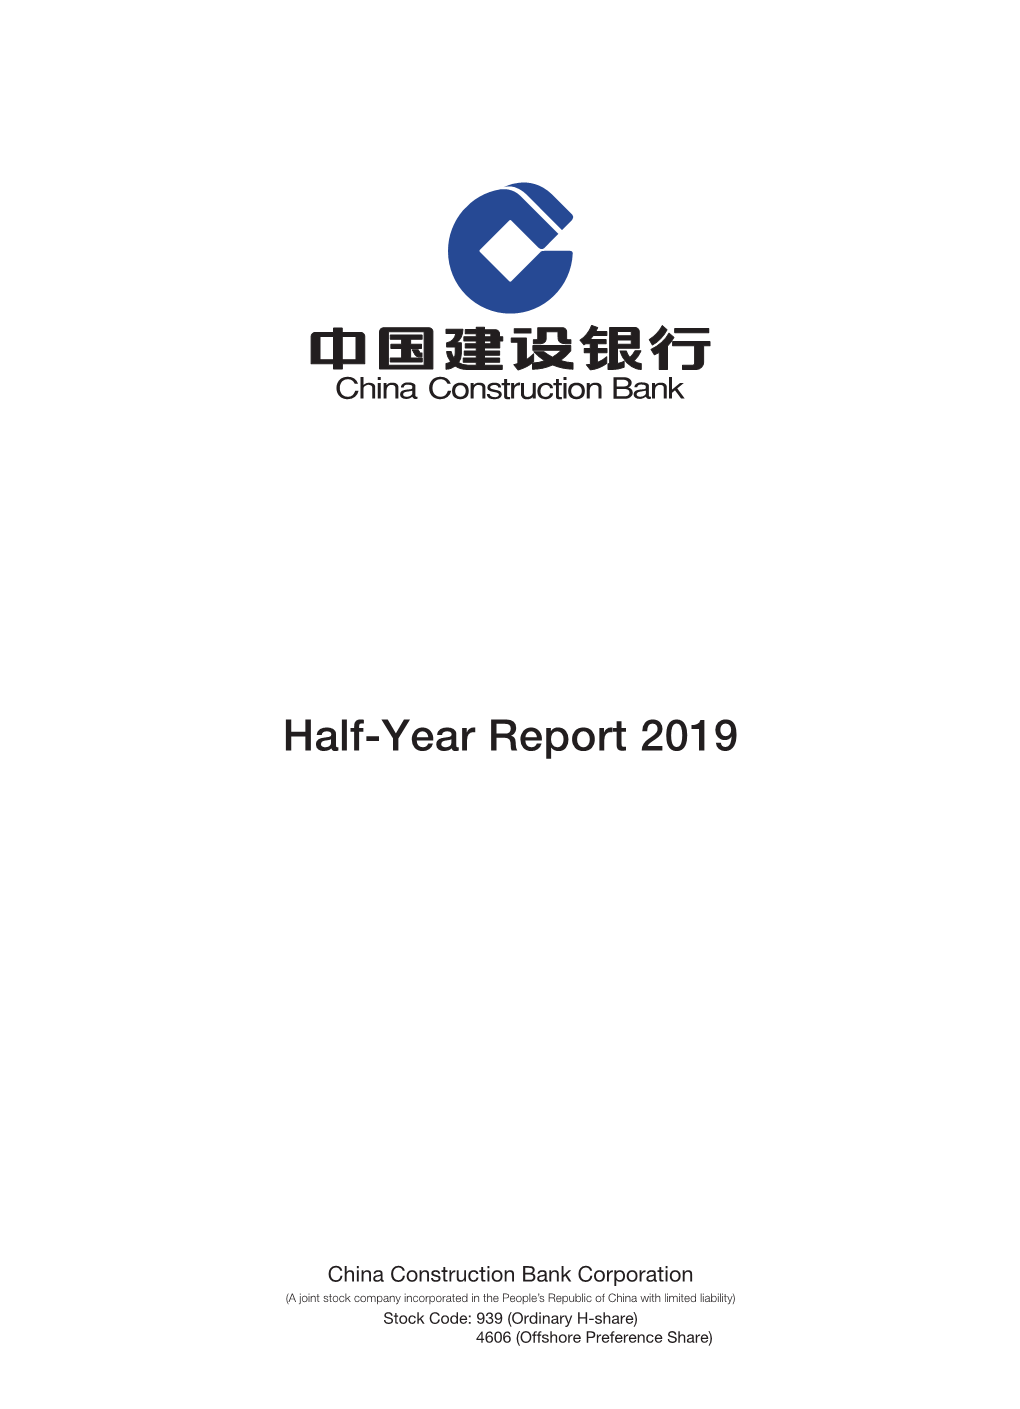 Half-Year Report 2019